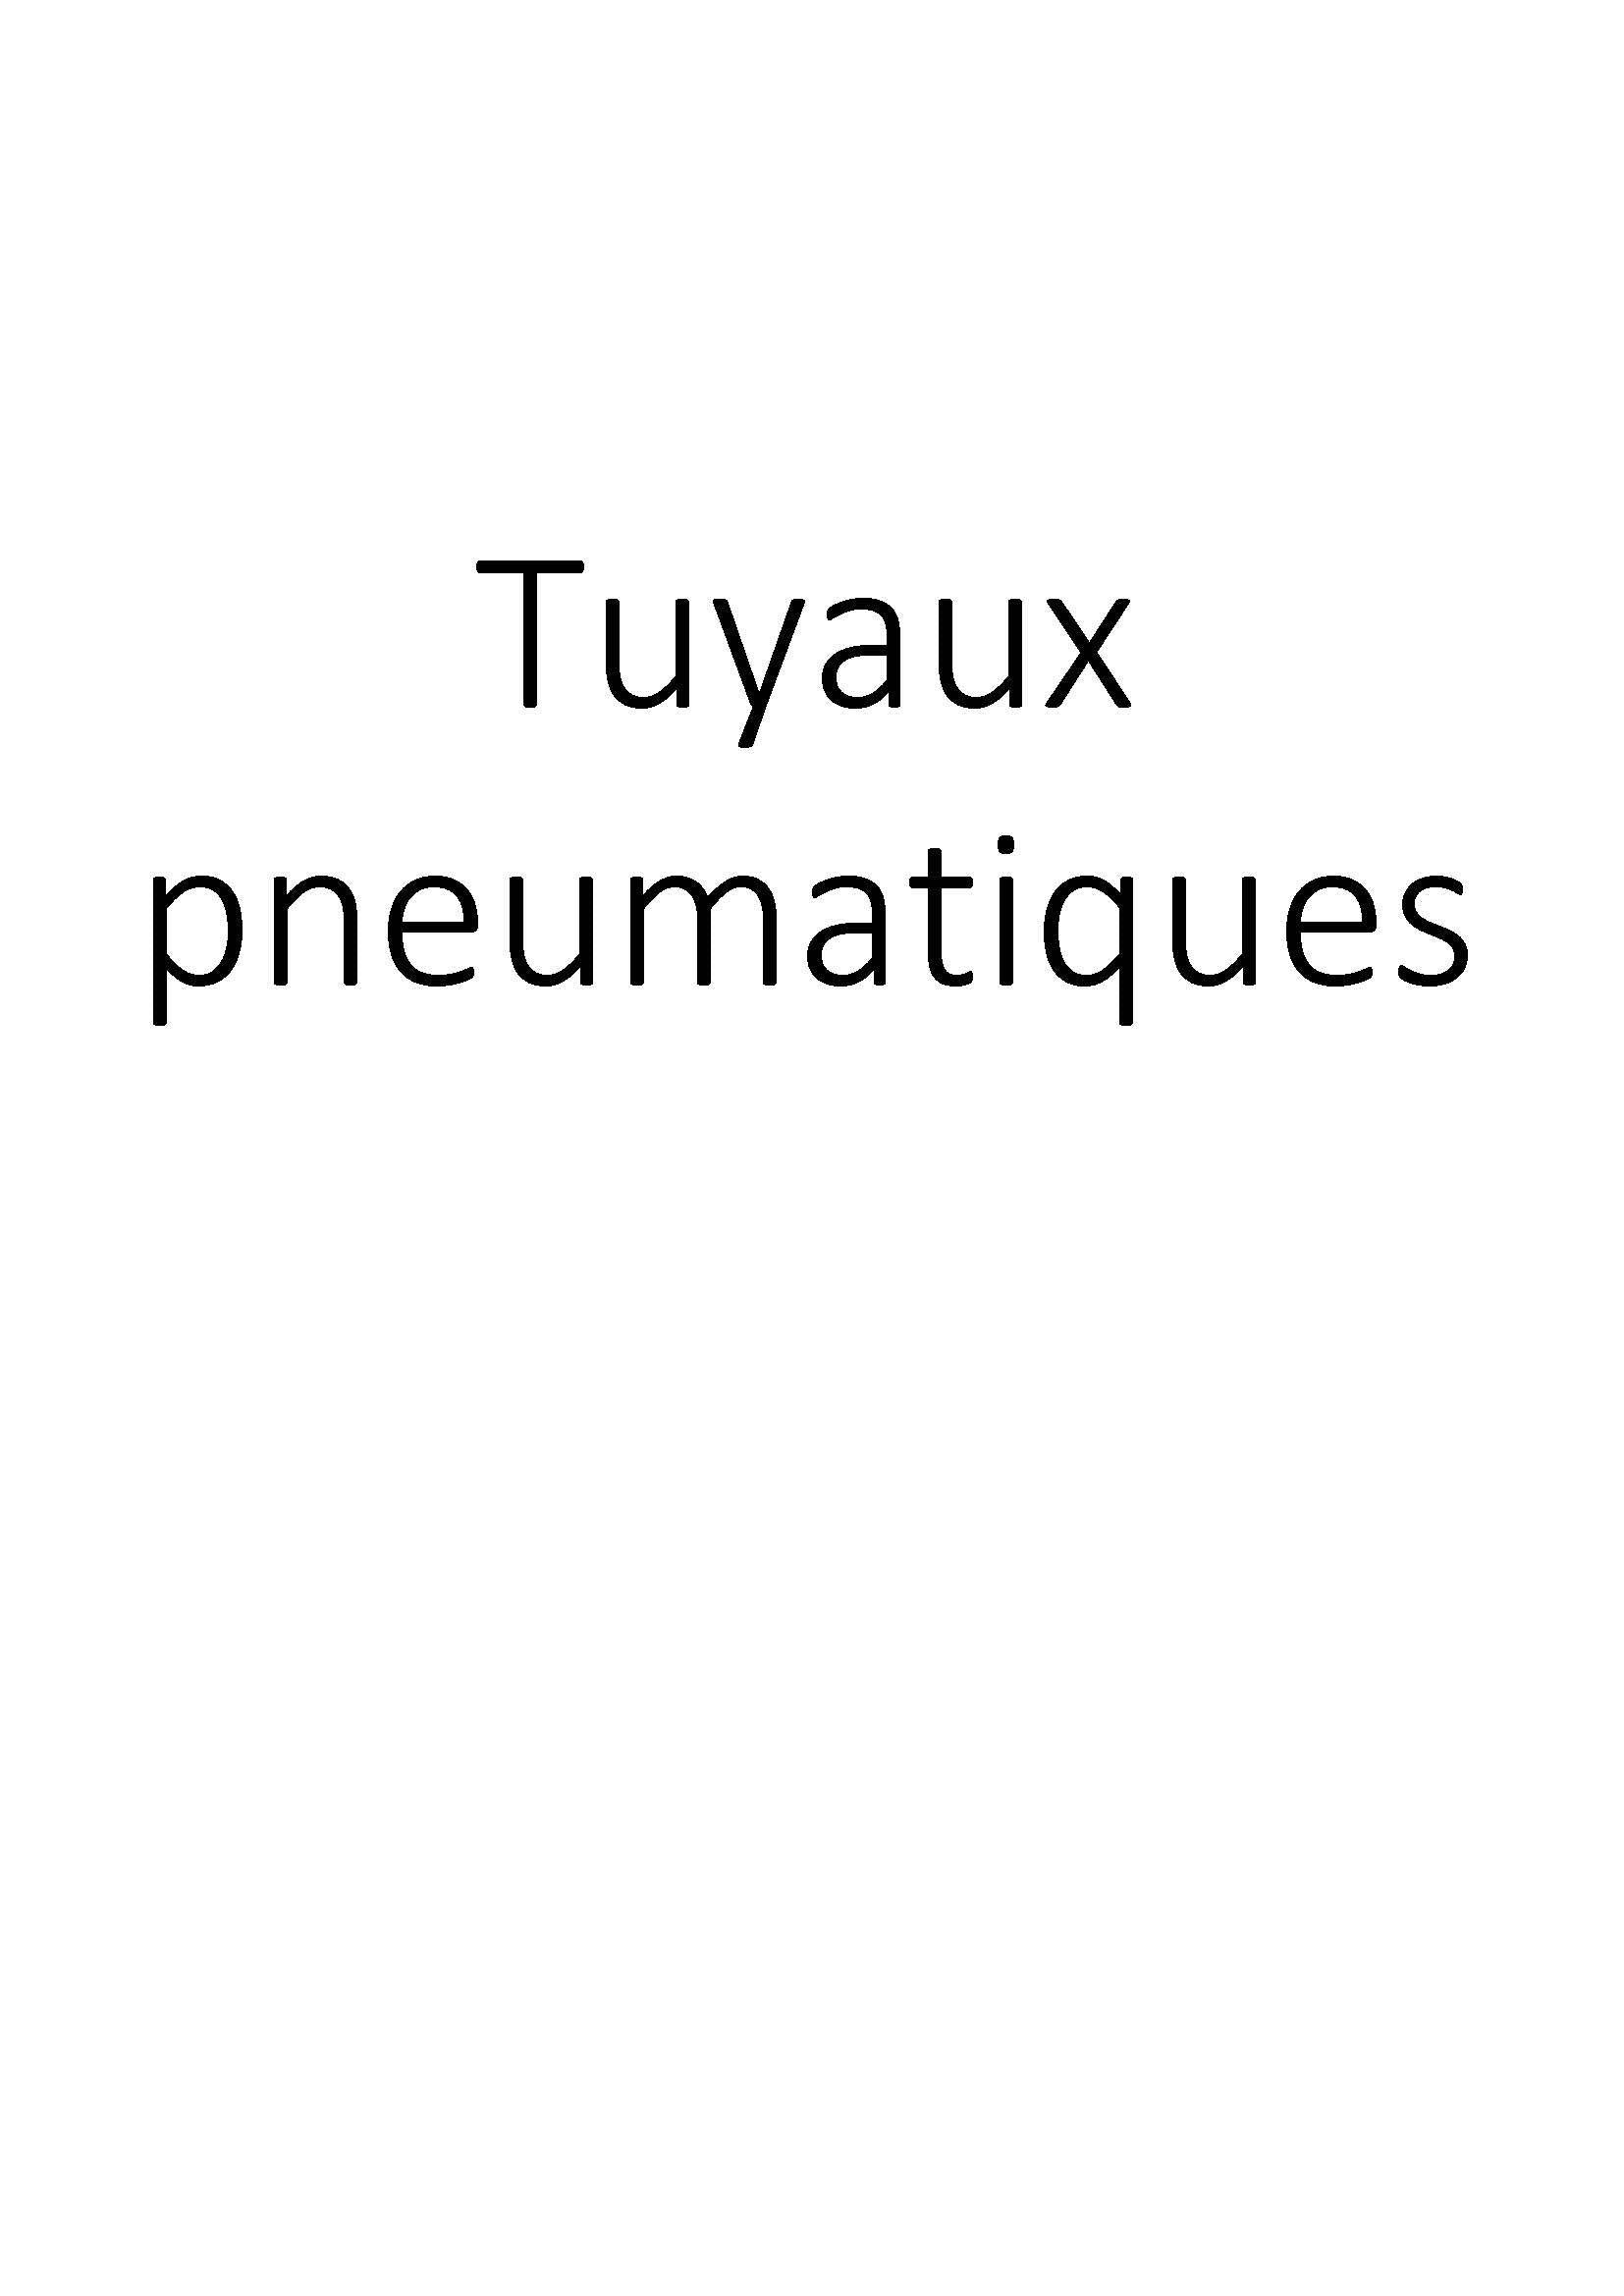 Tuyaux pneumatiques clicktofournisseur.com